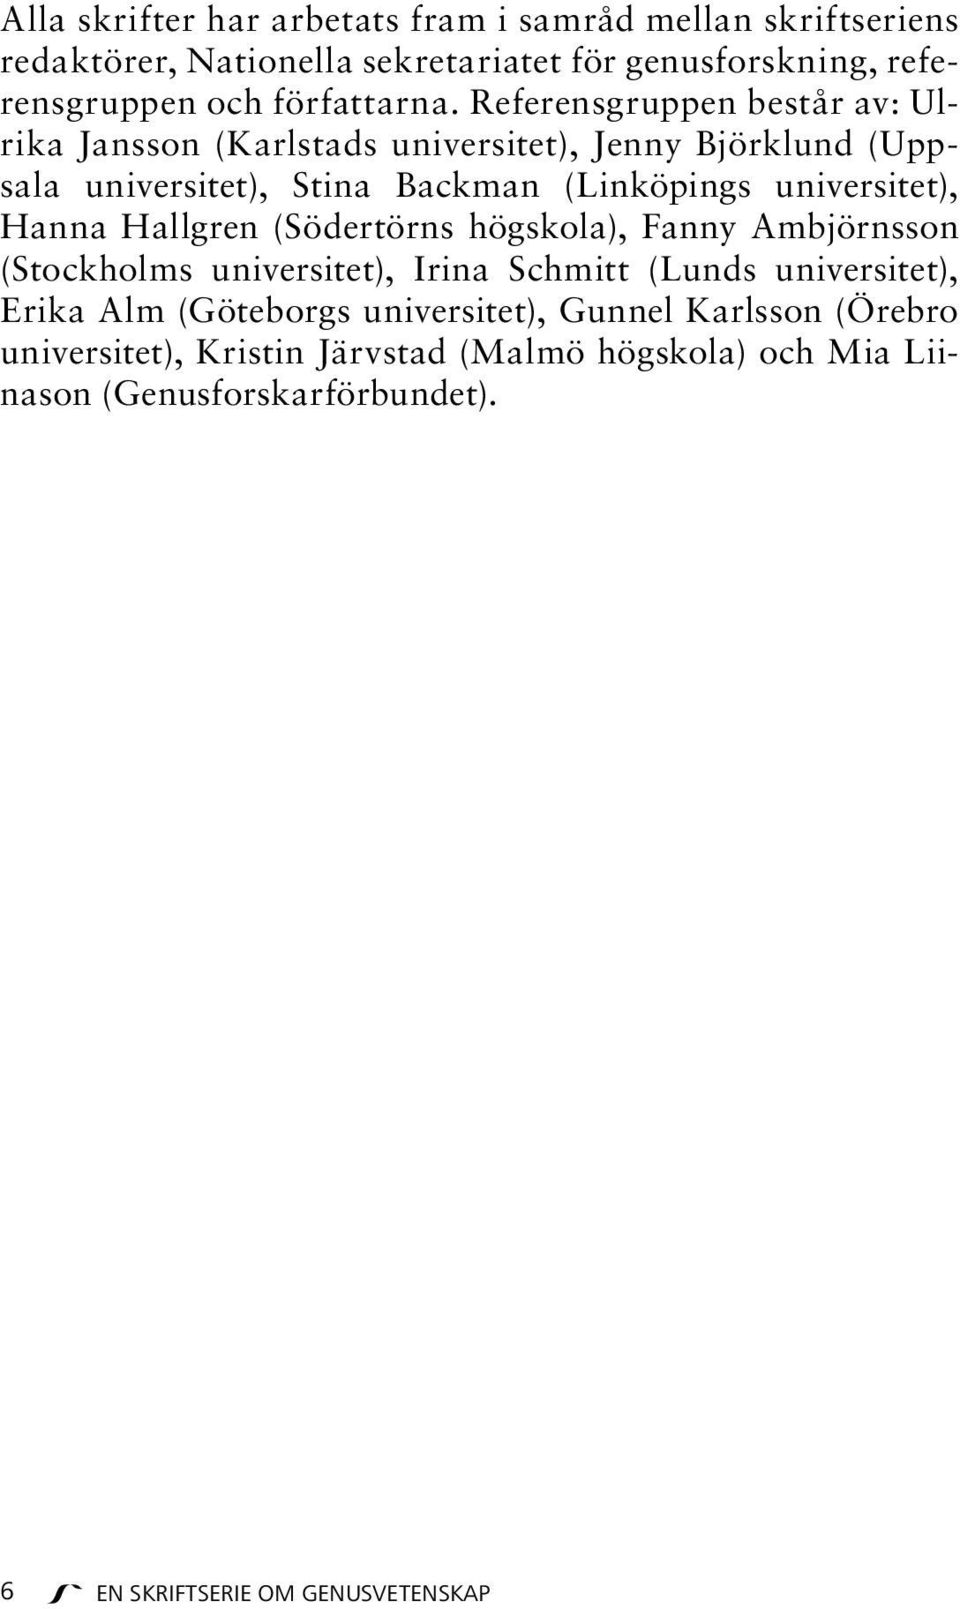 Referensgruppen består av: Ulrika Jansson (Karlstads universitet), Jenny Björklund (Uppsala universitet), Stina Backman (Linköpings universitet),